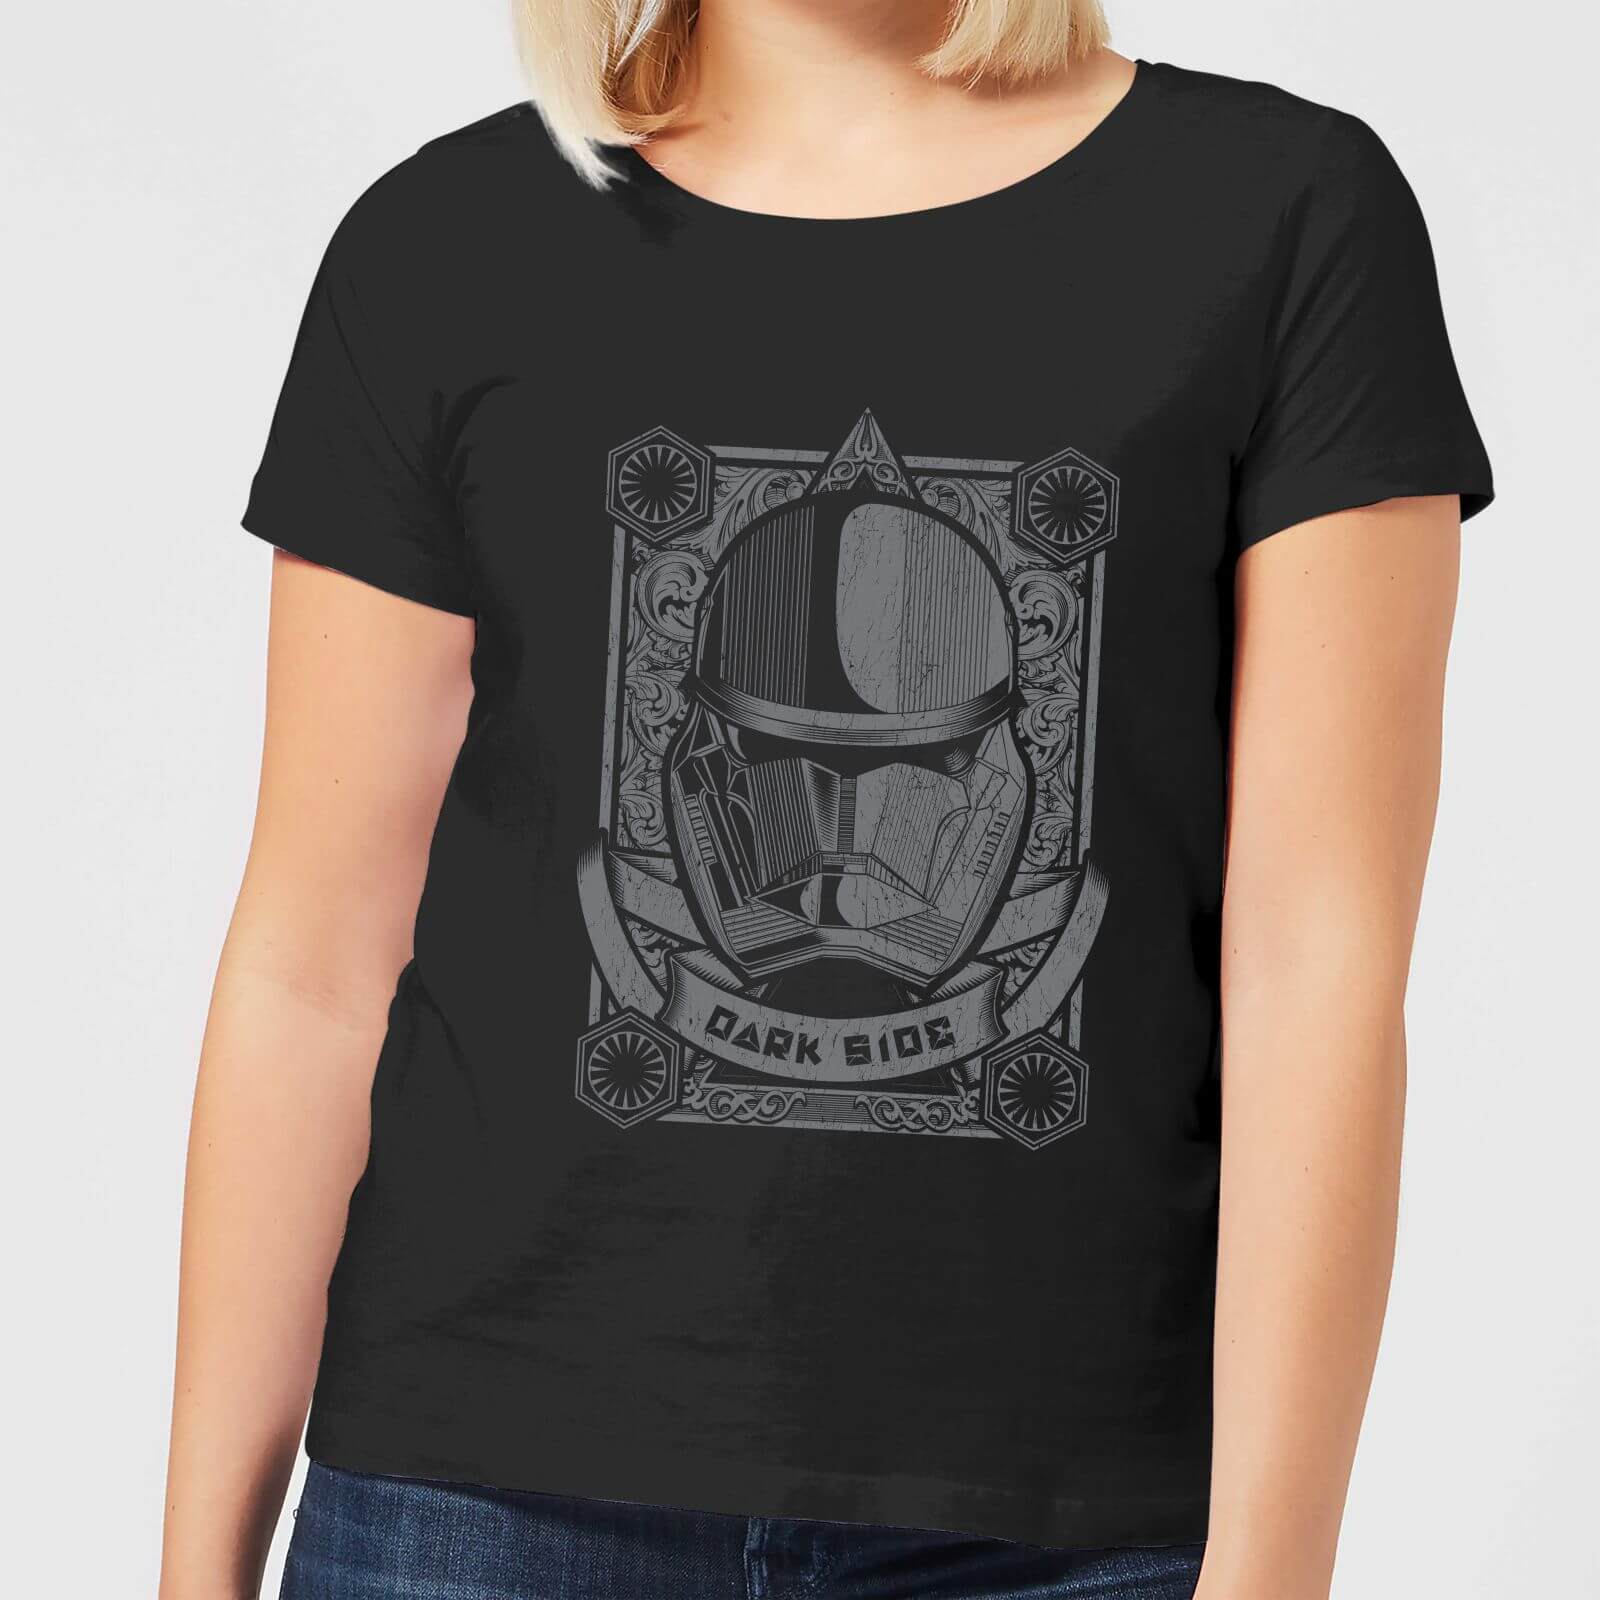 Star Wars Darkside Trooper Women's T-Shirt - Black - S - Black